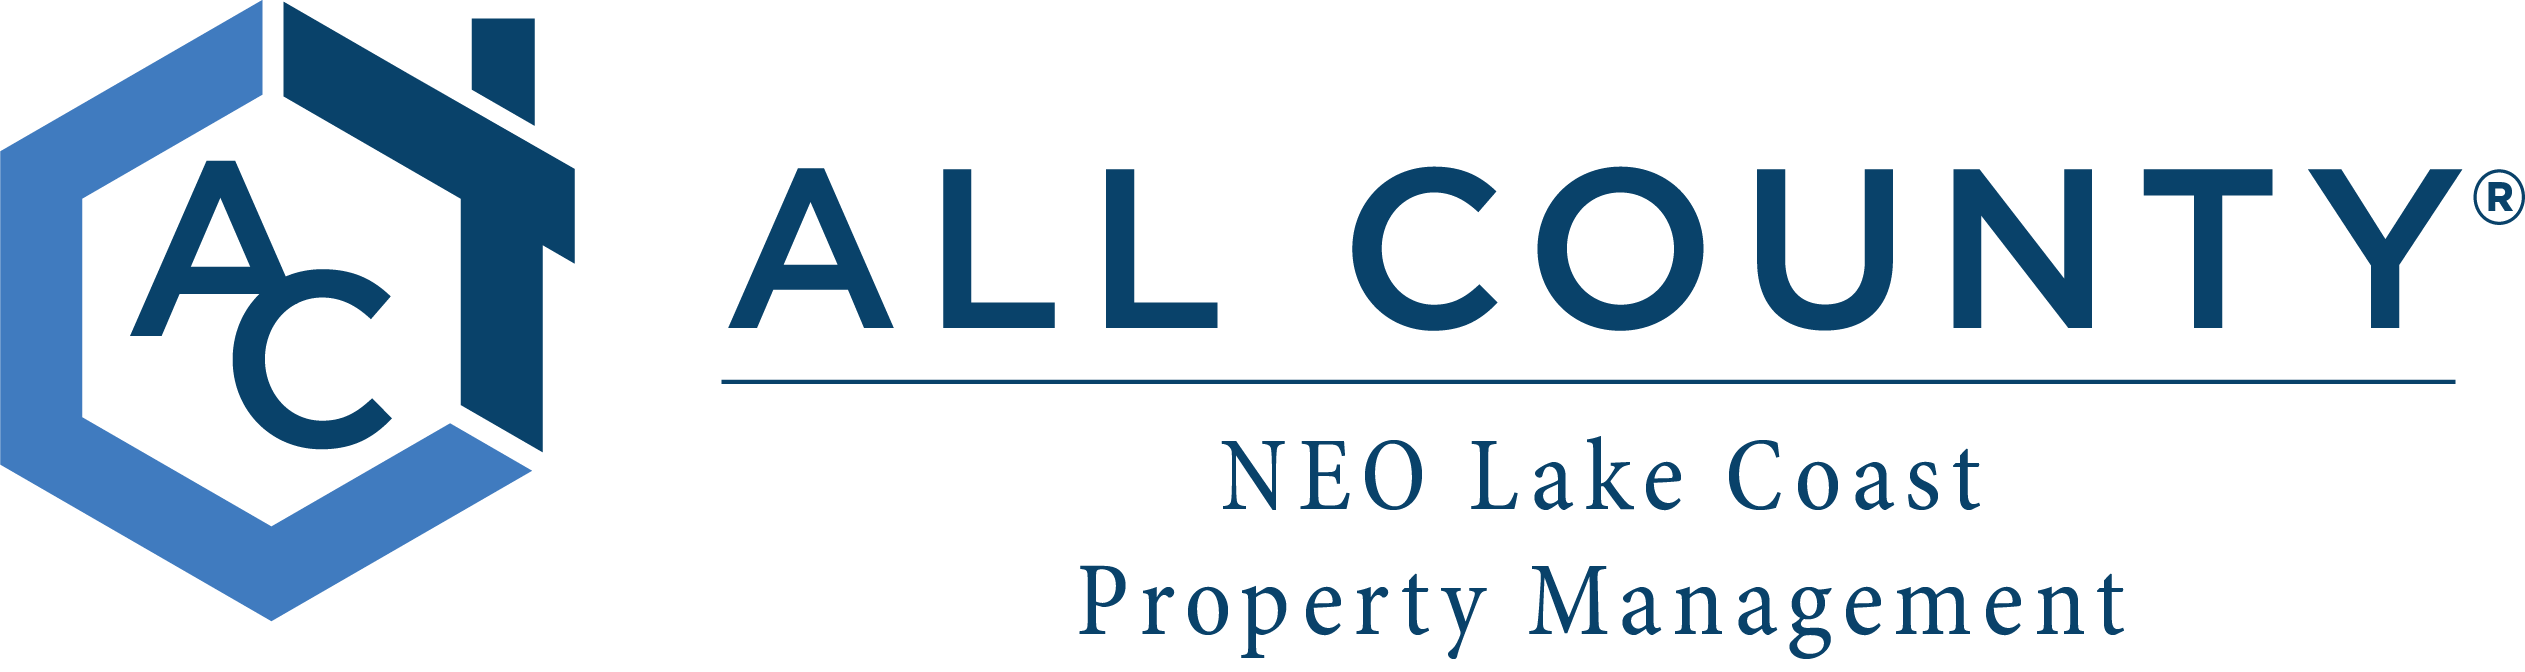 All County NEO Lake Coast Property Management logo